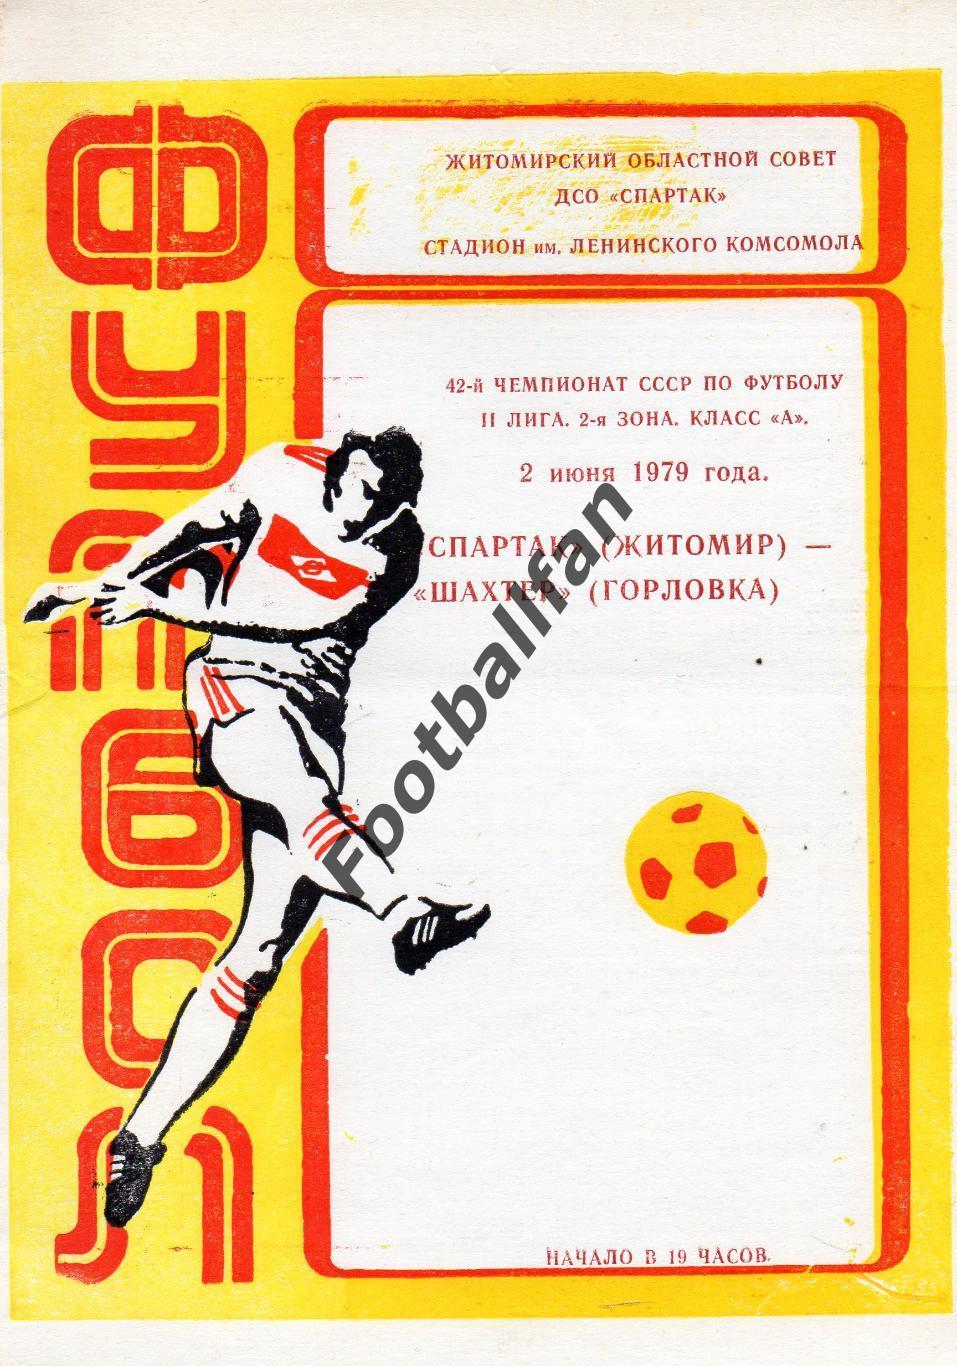 Спартак Житомир - Шахтер Горловка 02.06.1979